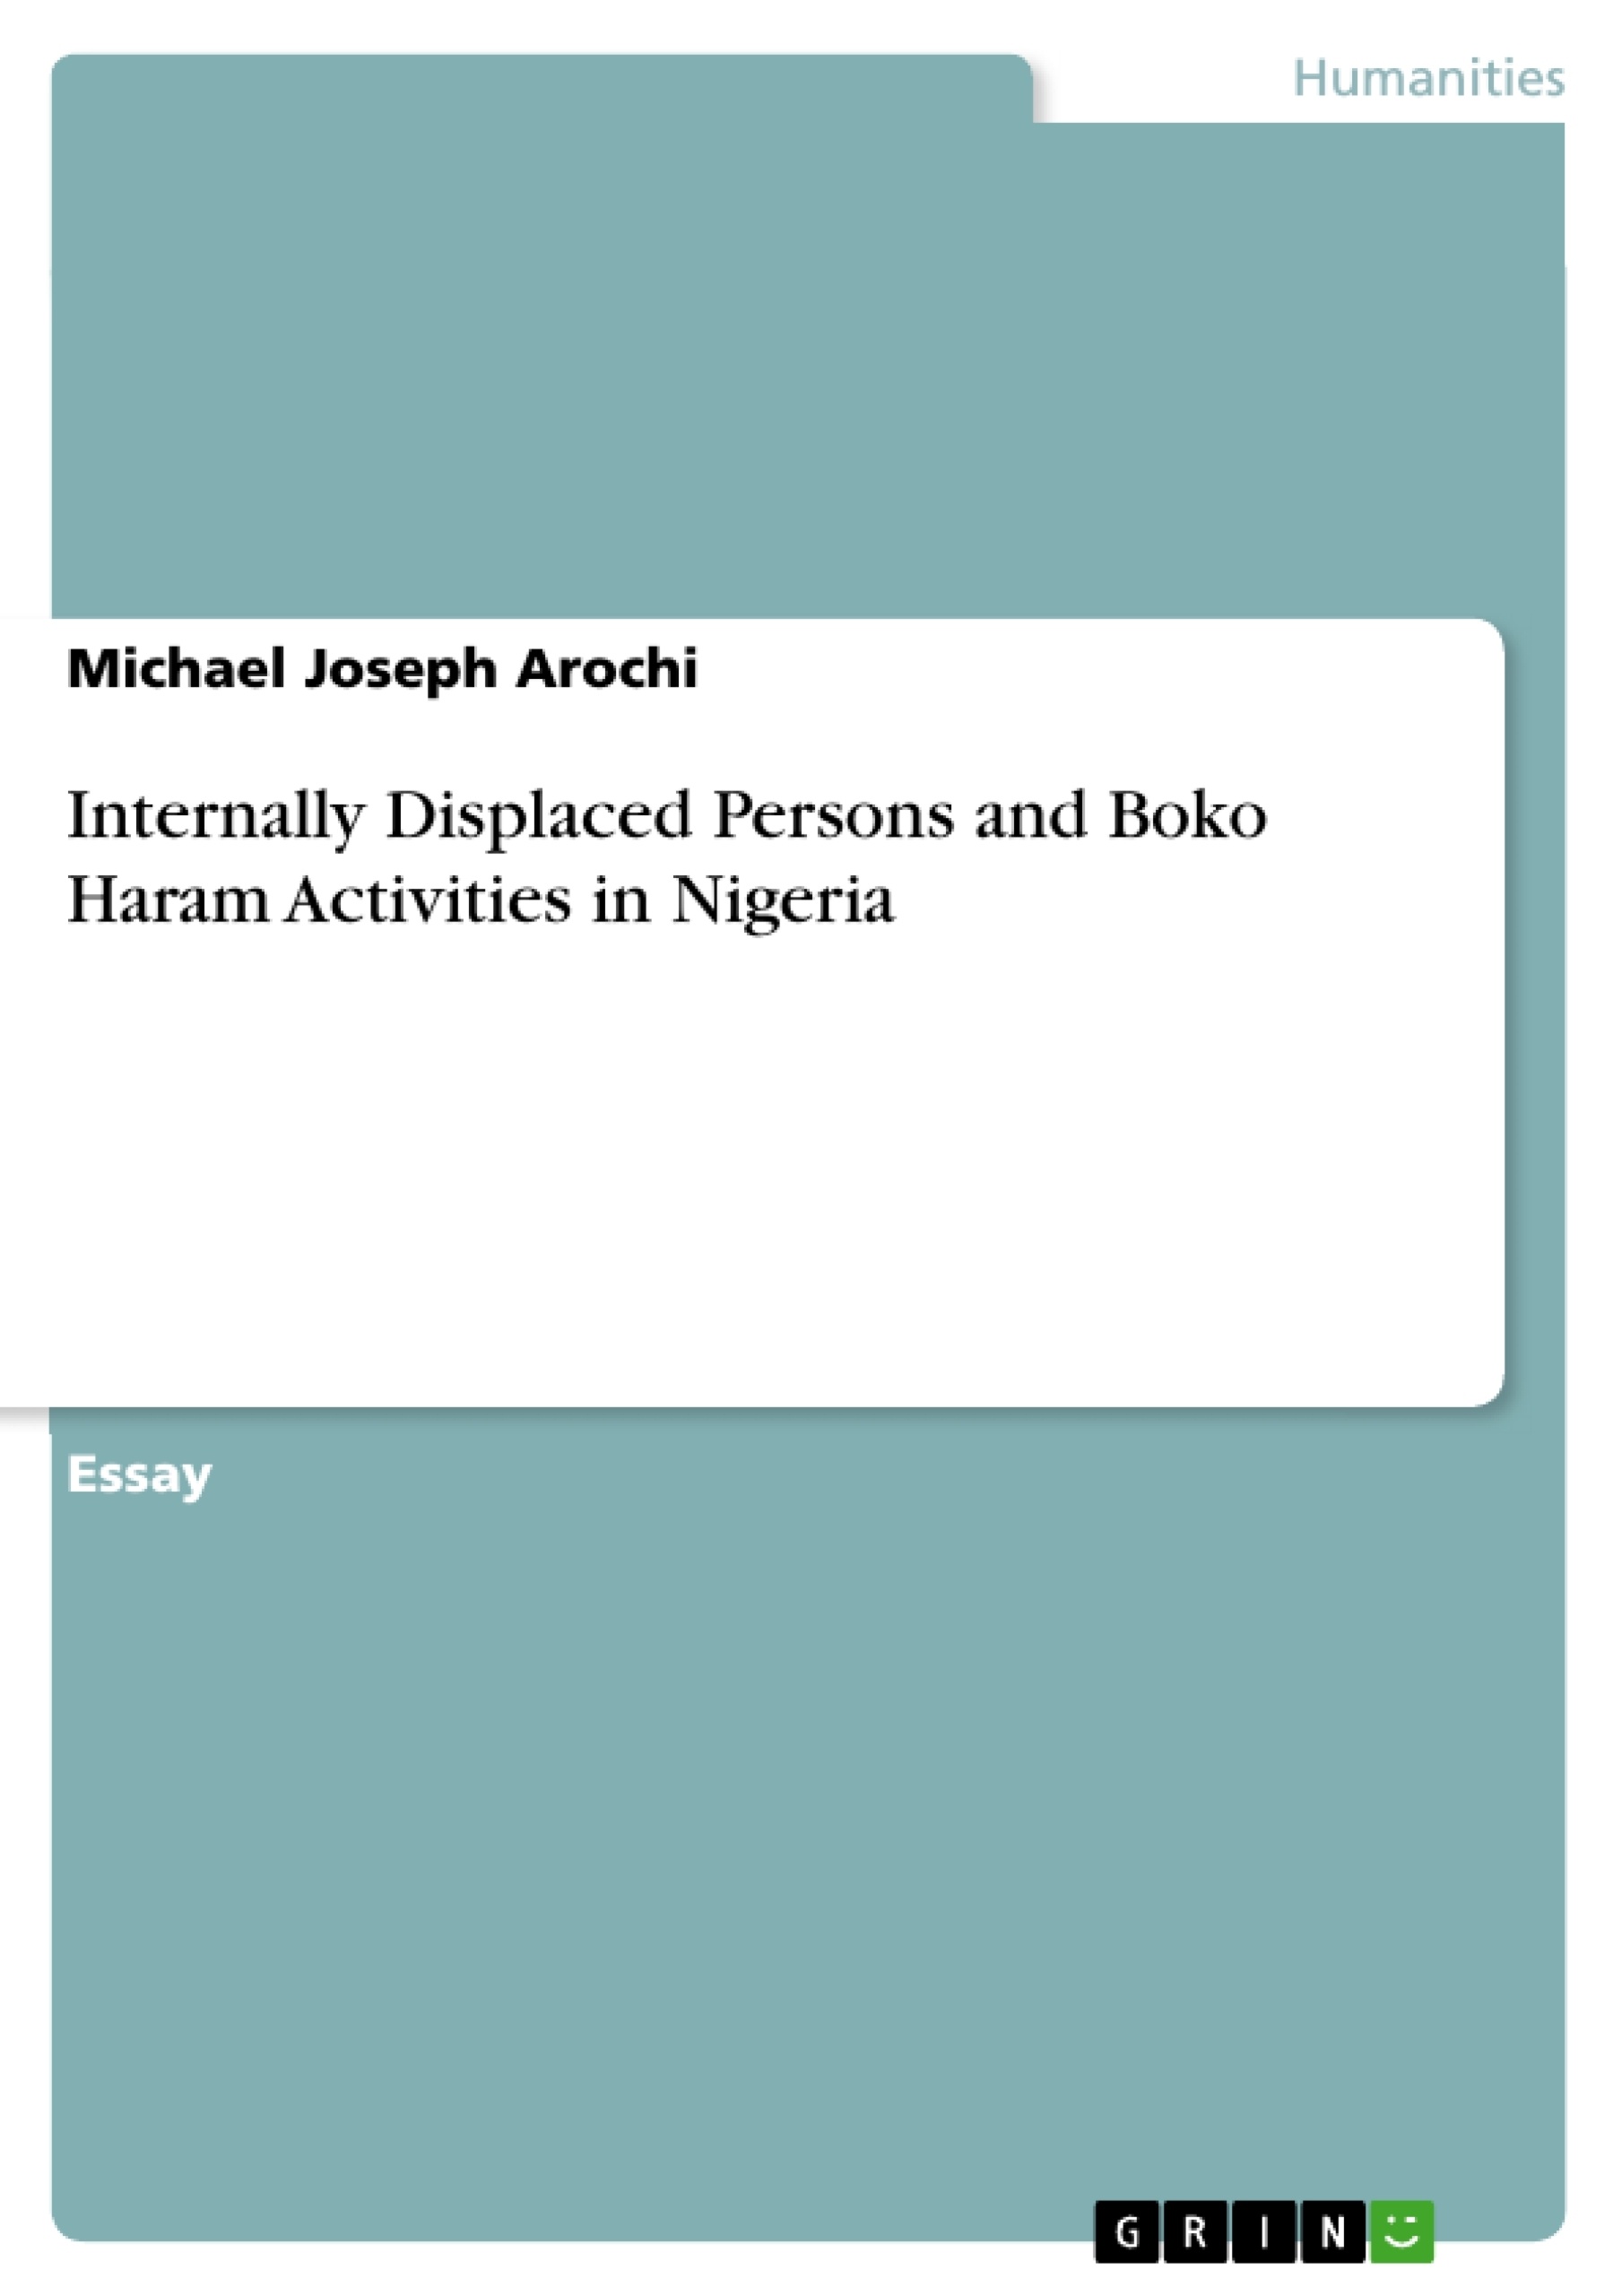 Radical essays on nigerian literature